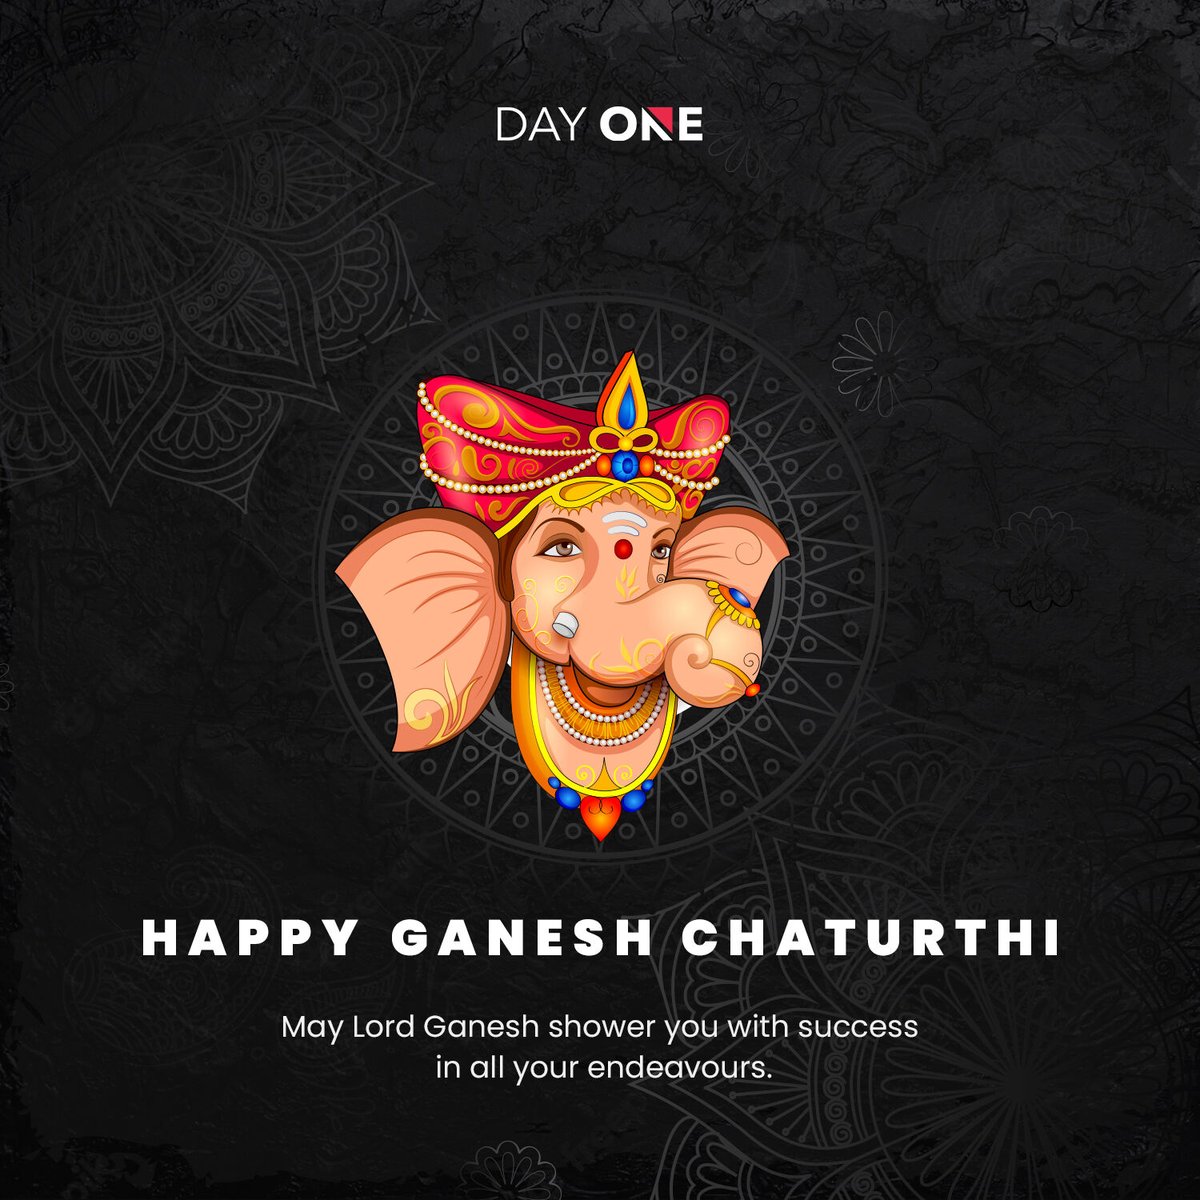 Day One Team wishes you all a Happy Ganesh Chaturthi 2022! #ganeshchaturthi #ganeshchaturthi2022 #festival #appdevelopment #dayone #dayonetech #appdevelopmentcompany #fintech #fintechapp #traveltech #edtech